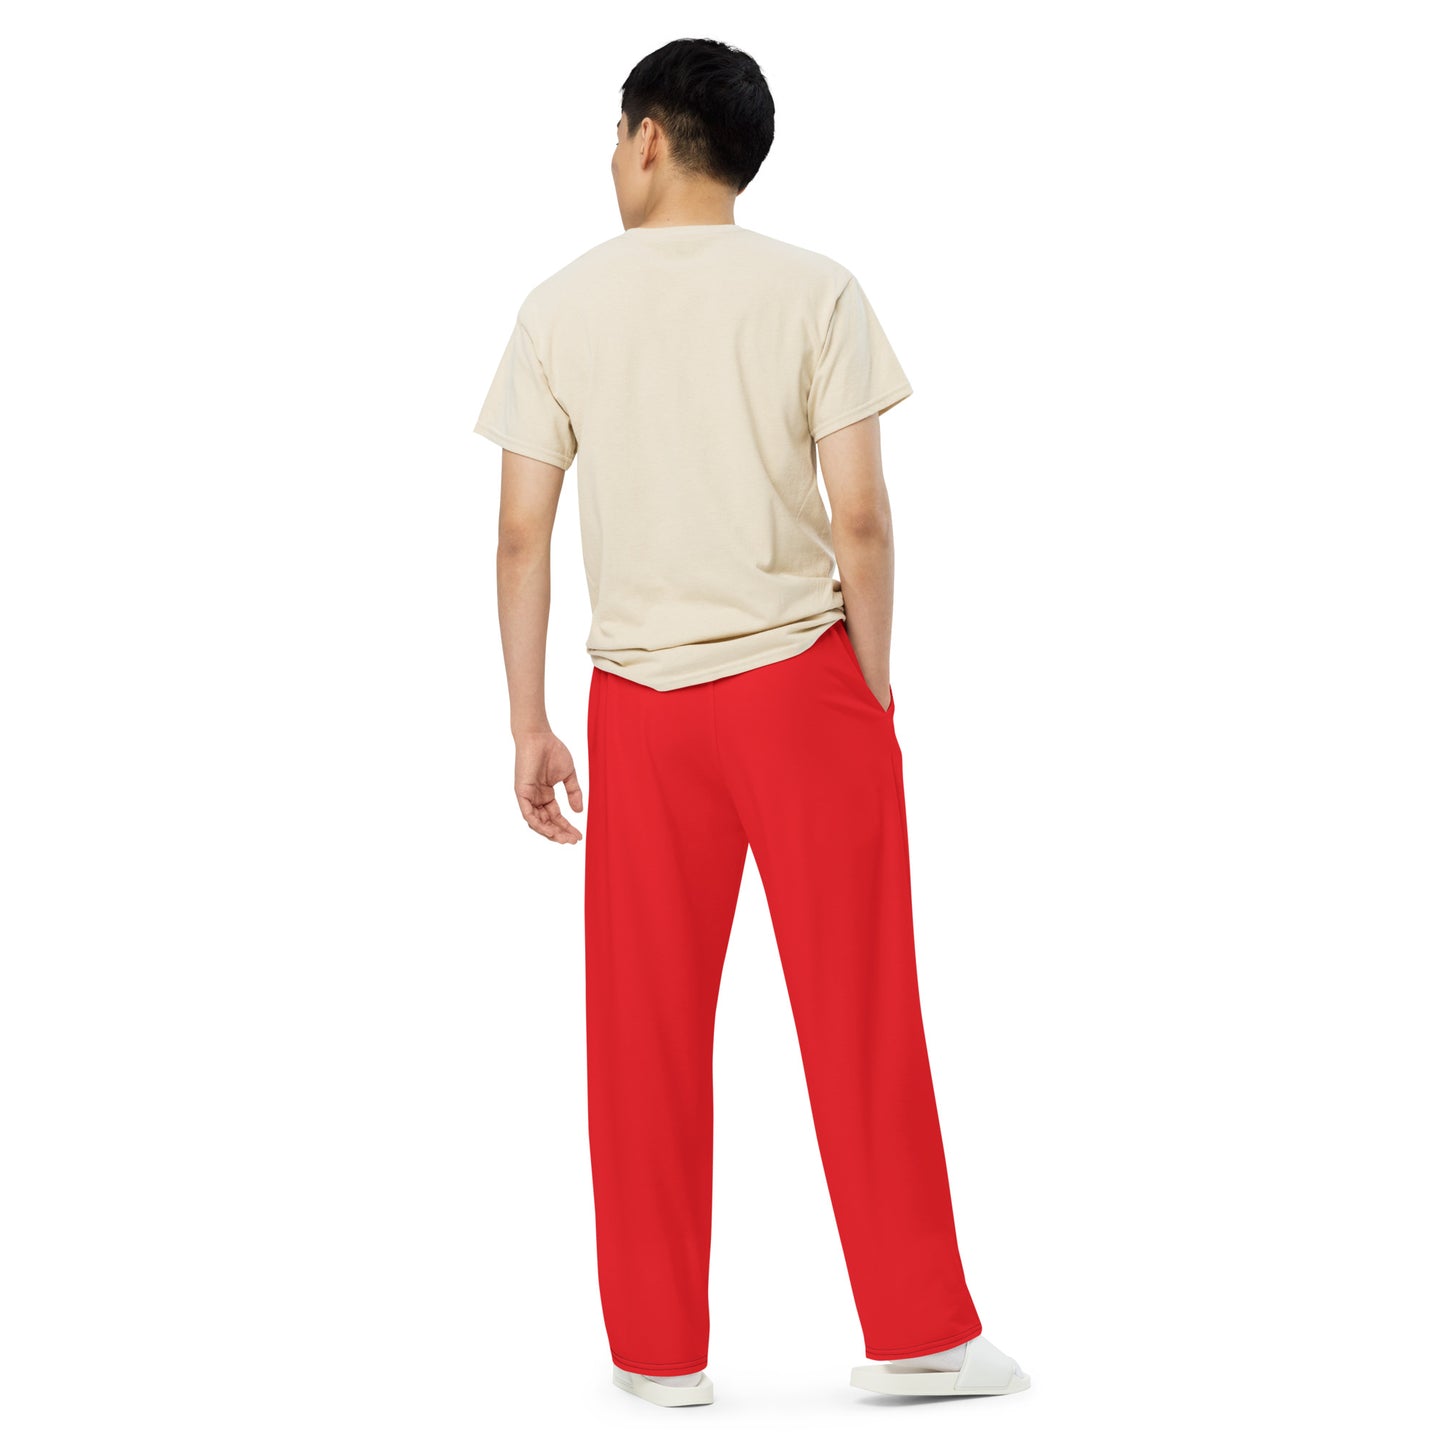 Red wide-leg pants